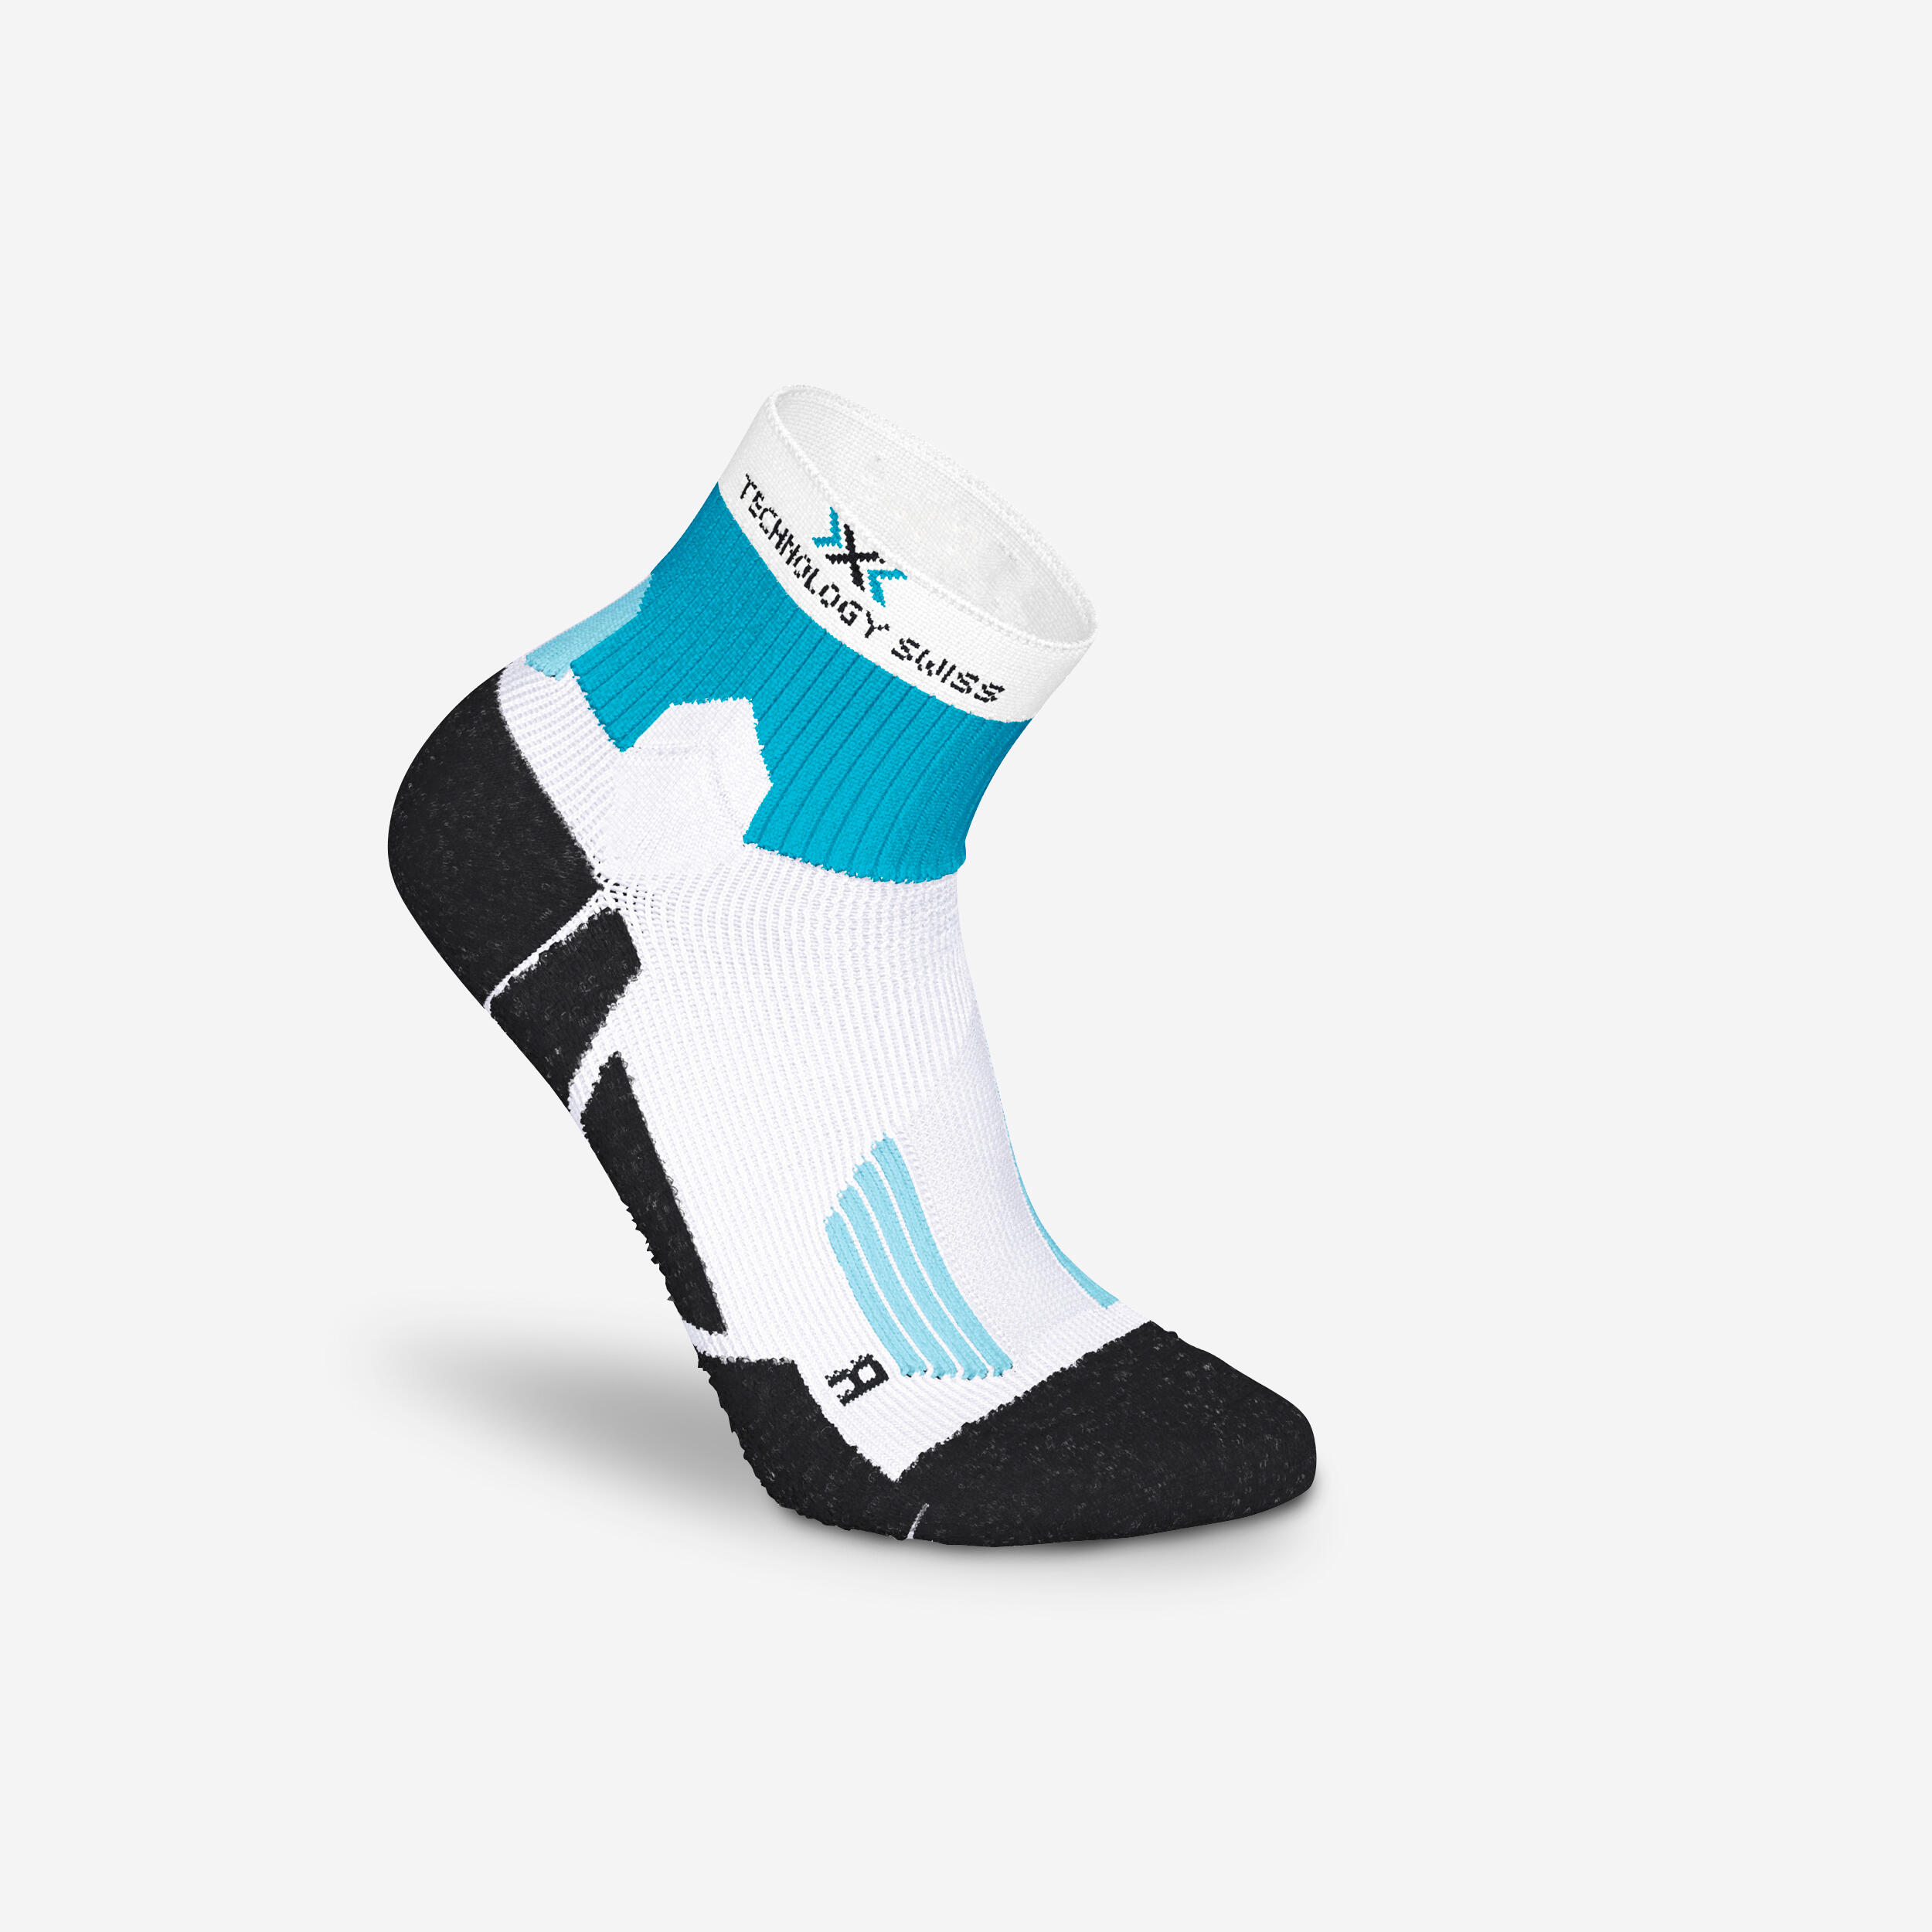 Nordic Walking Socks